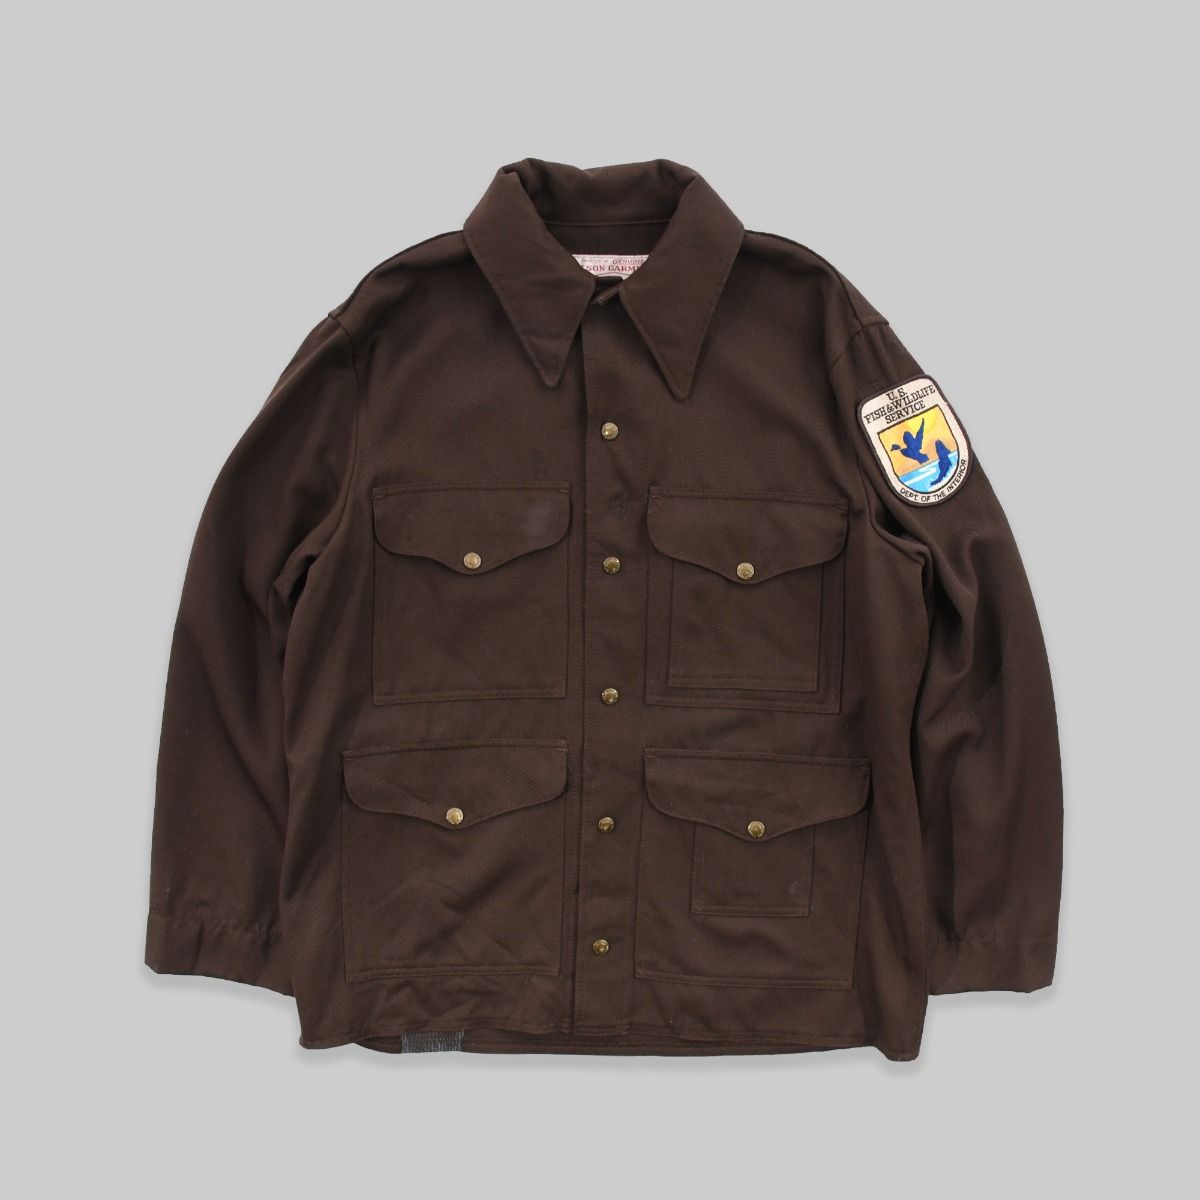 Filson 1980s US Fish & Wildlife Service Jacket